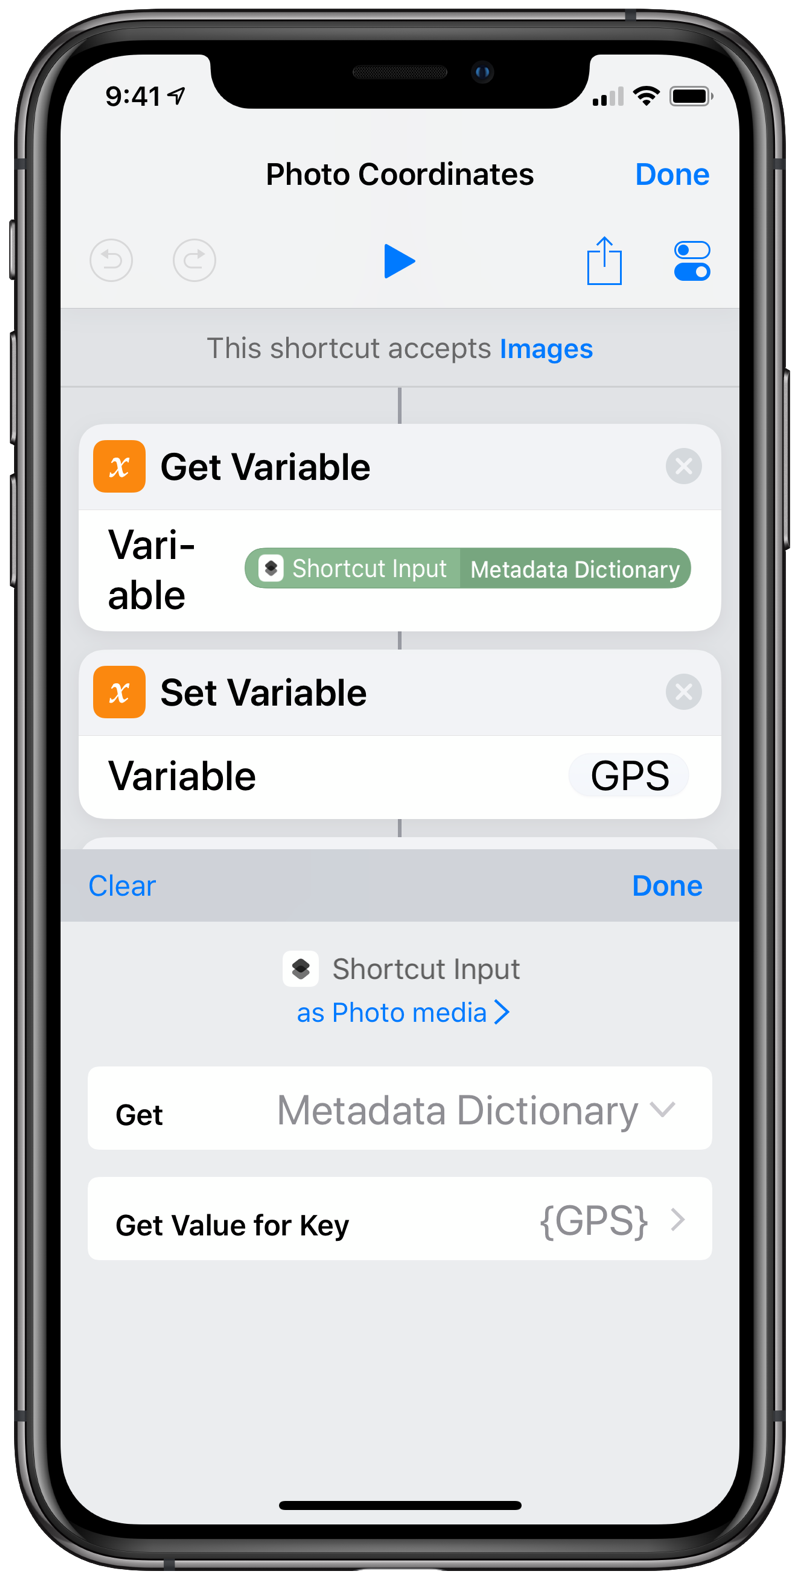 Choosing {GPS} item of Metadata Dictionary